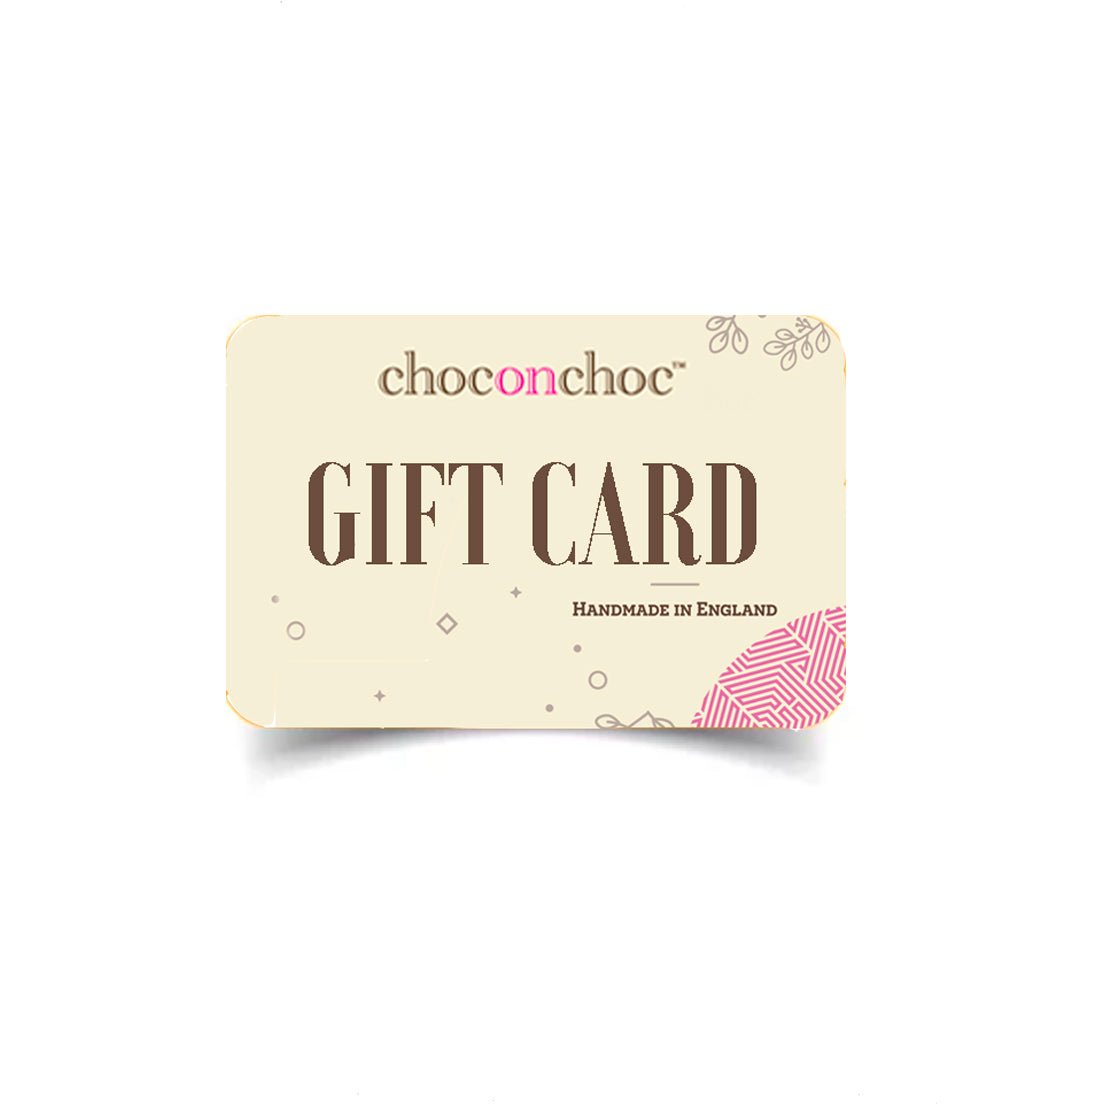 Choc on Choc Gift Card | home